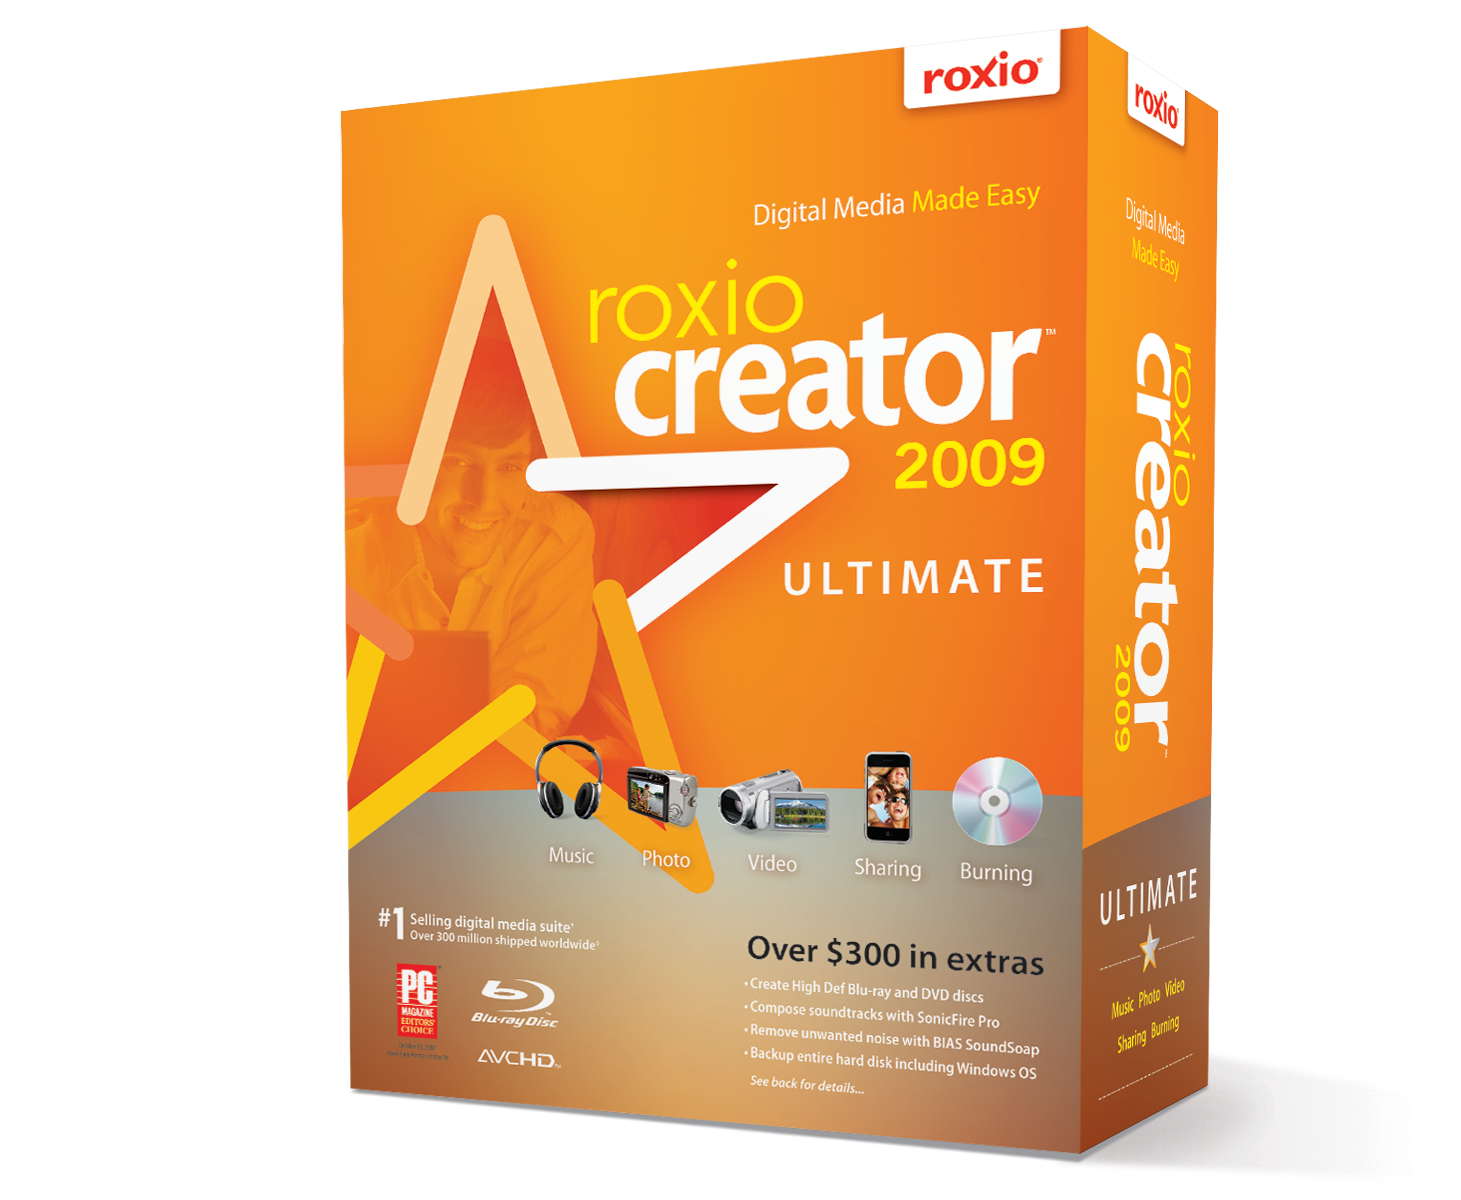 roxio easy creator 10 free download